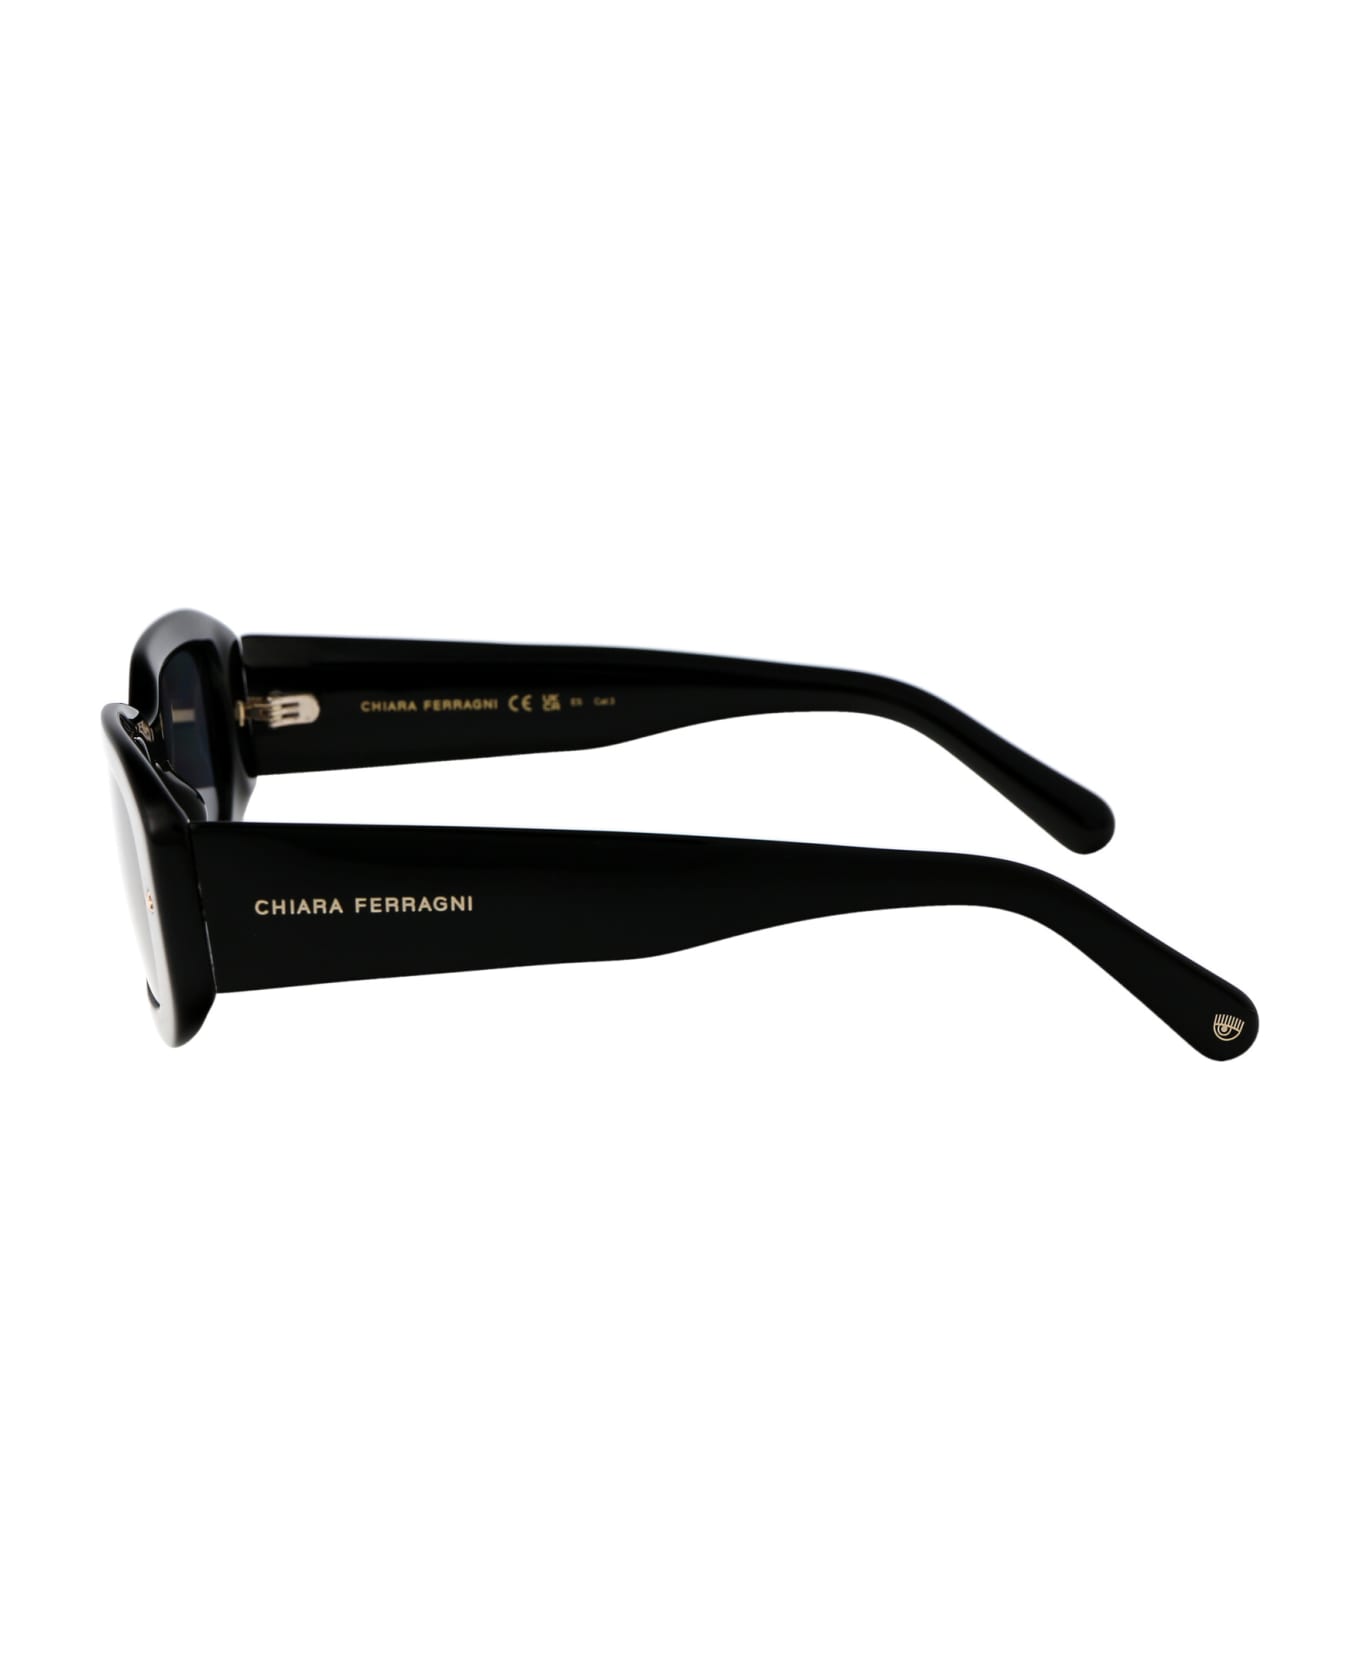 Chiara Ferragni Cf 7031/s Sunglasses - 807IR BLACK